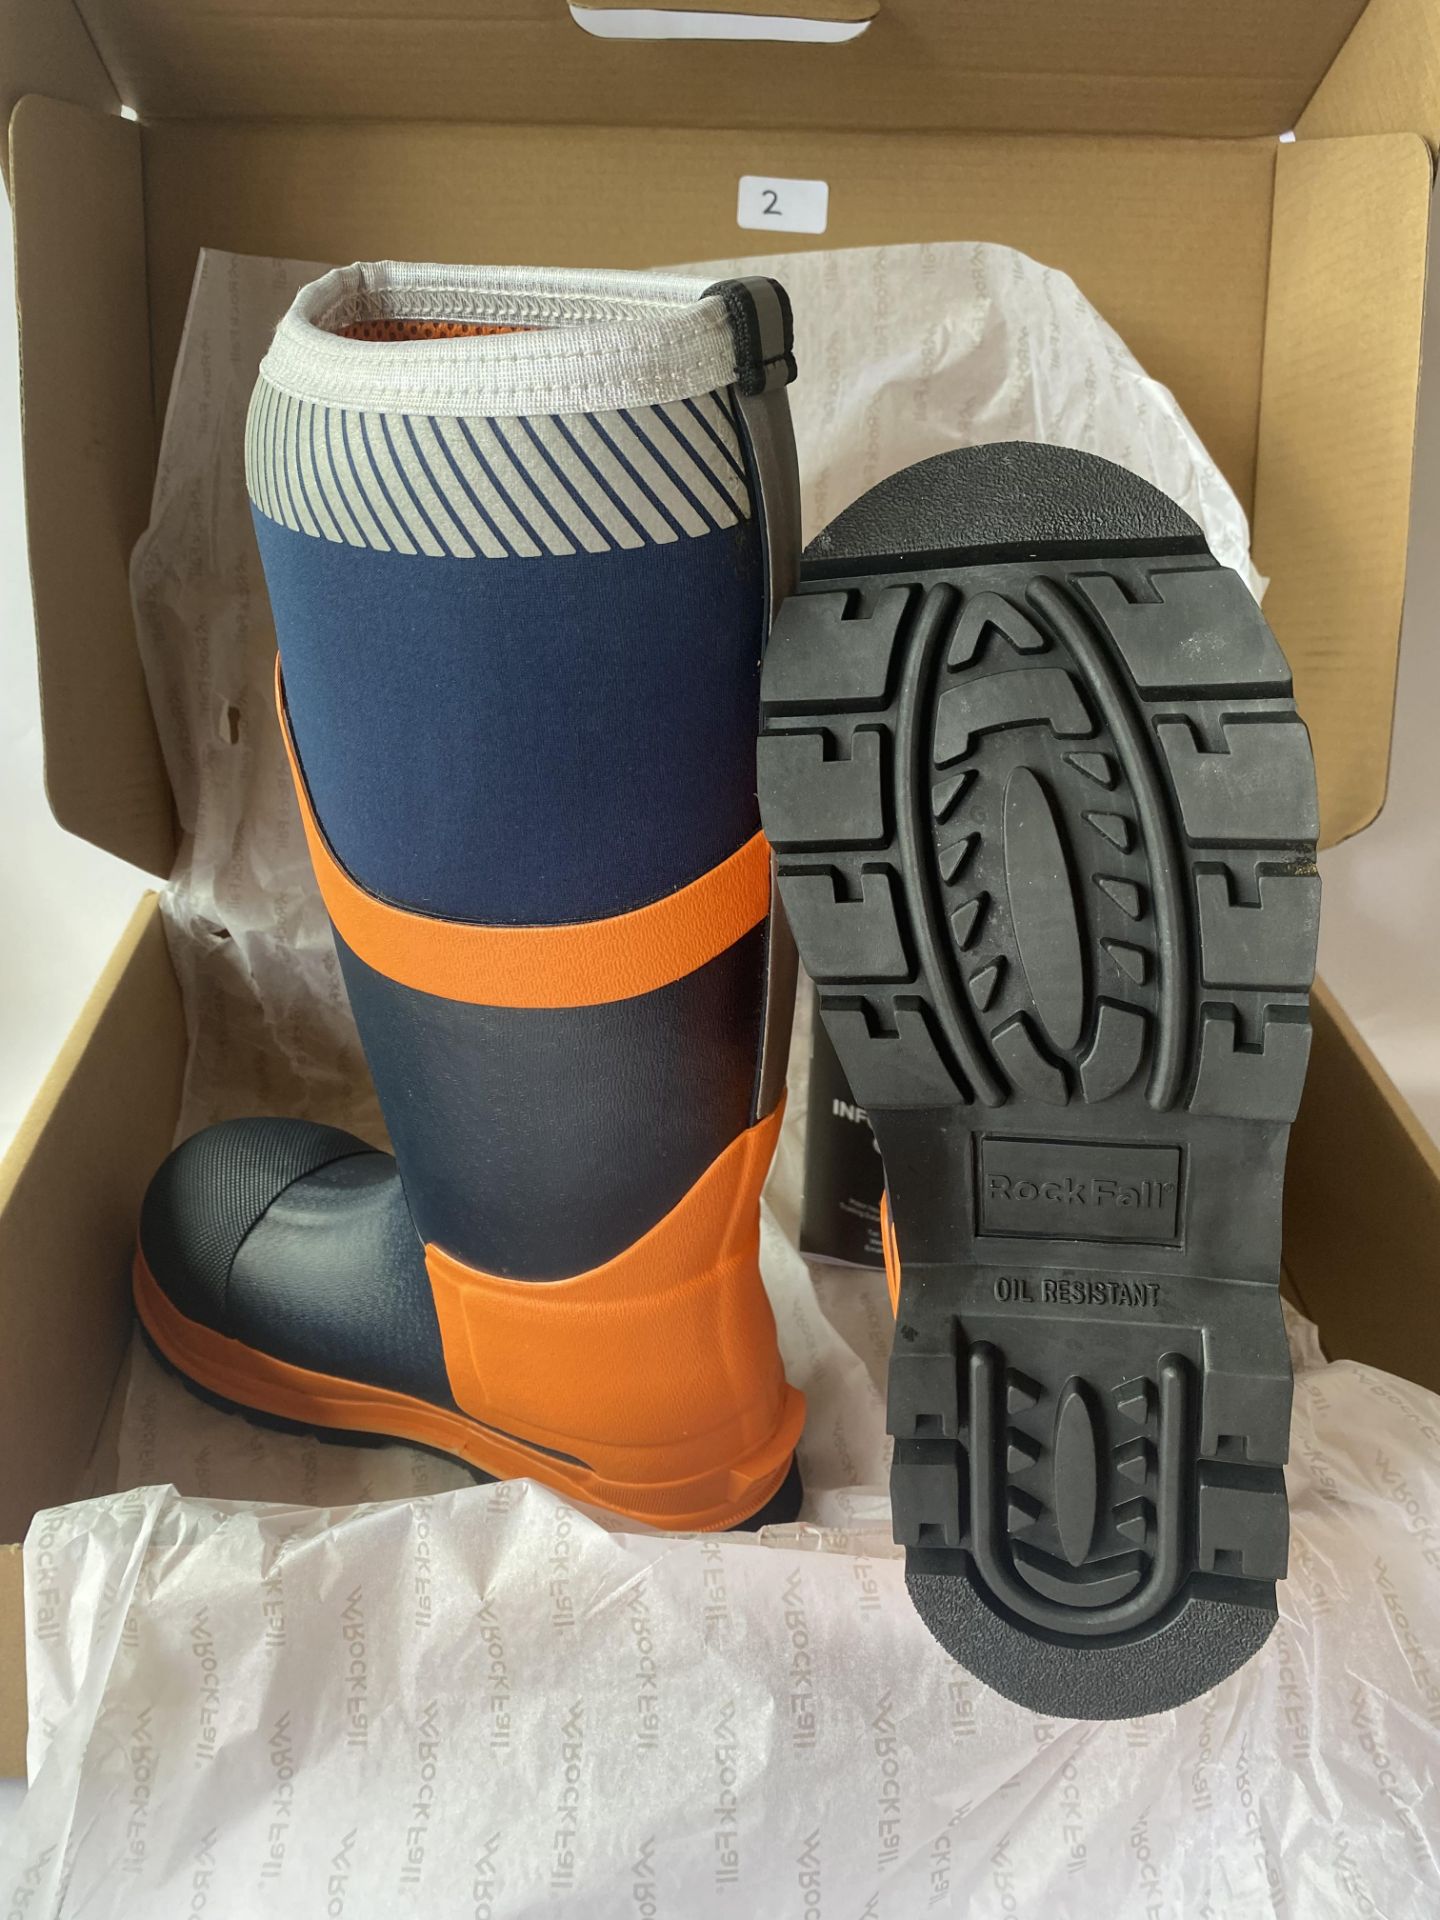 New Rock Fall Proman RF290 Insulated Silt Neoprene steel toe safety wellington boots - UK Size 5 - Image 2 of 3